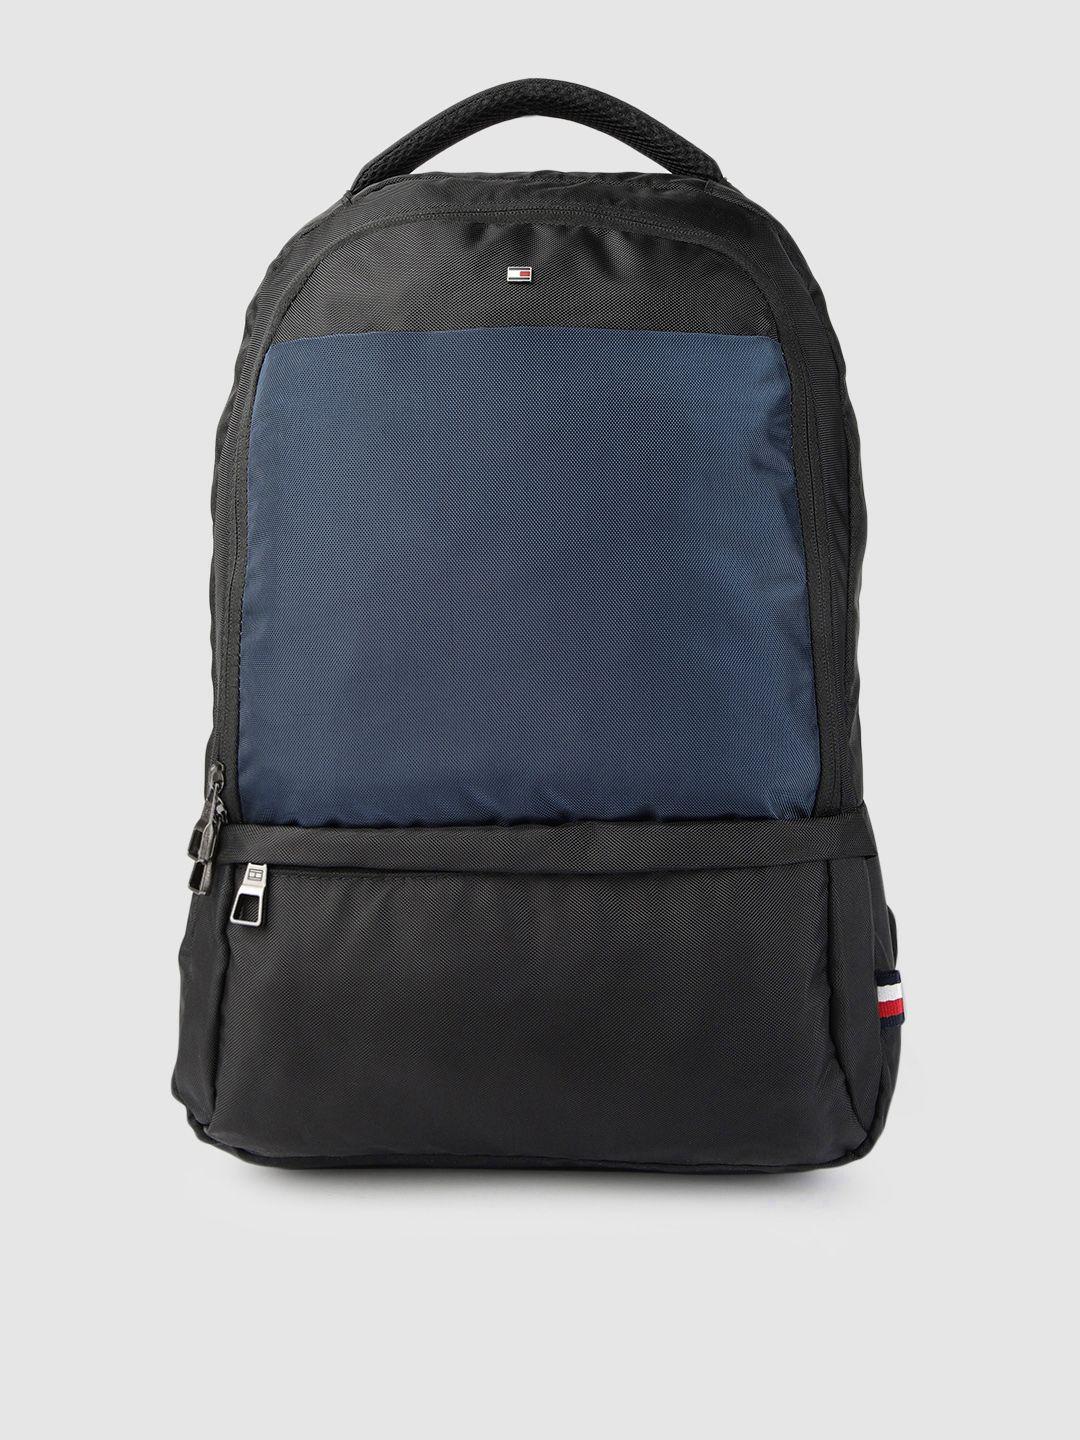 tommy hilfiger unisex black & navy blue colourblocked backpack